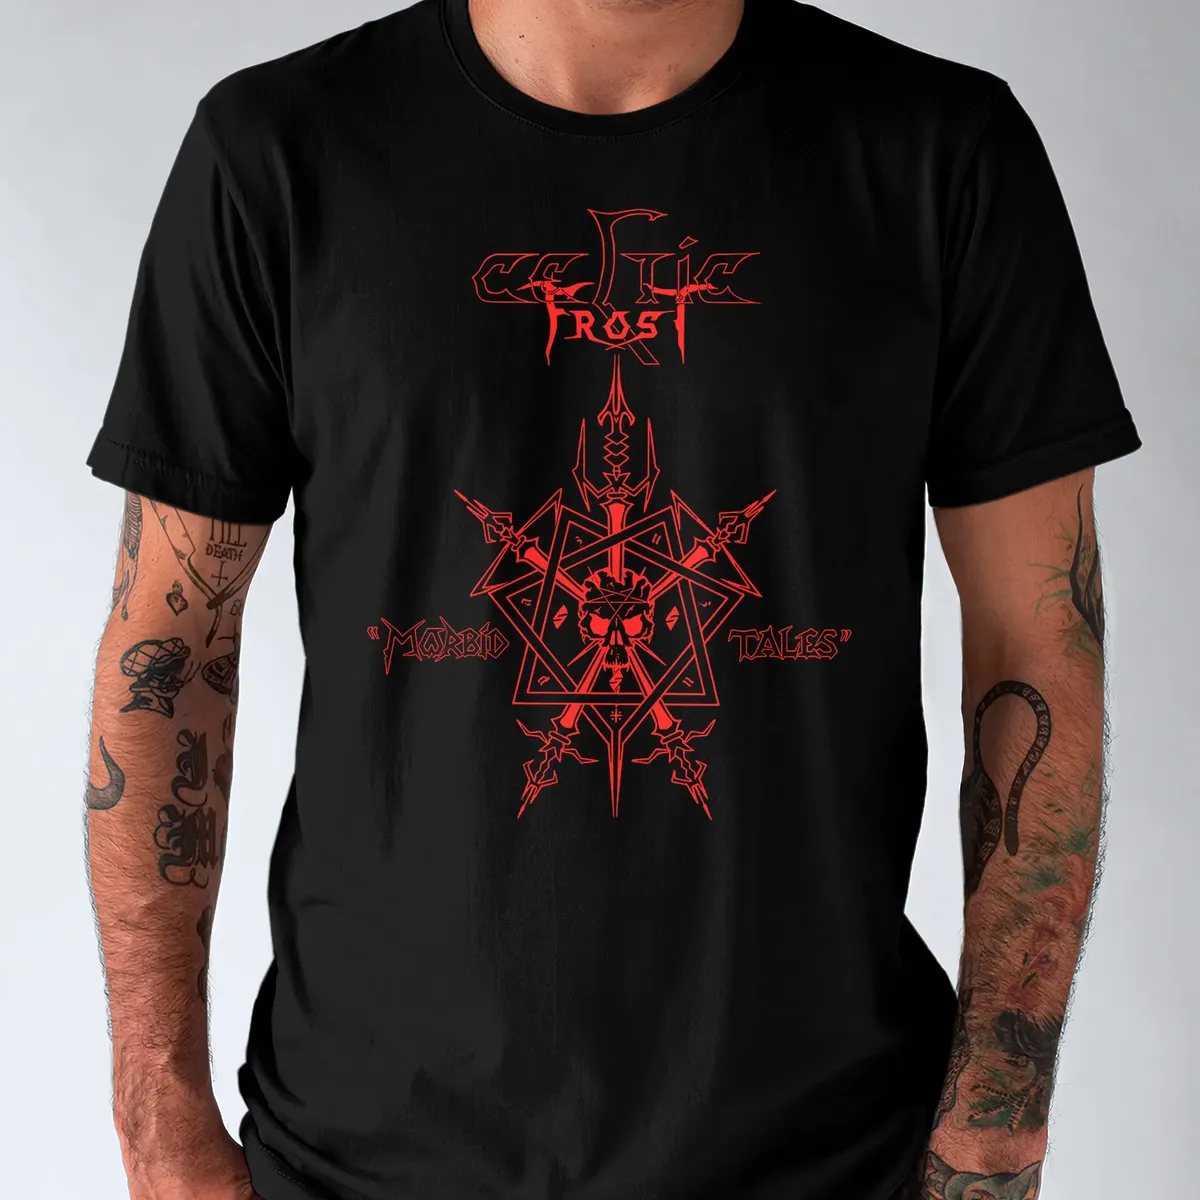 Nome do produto: Camiseta Celtic Frost Morbid Tales